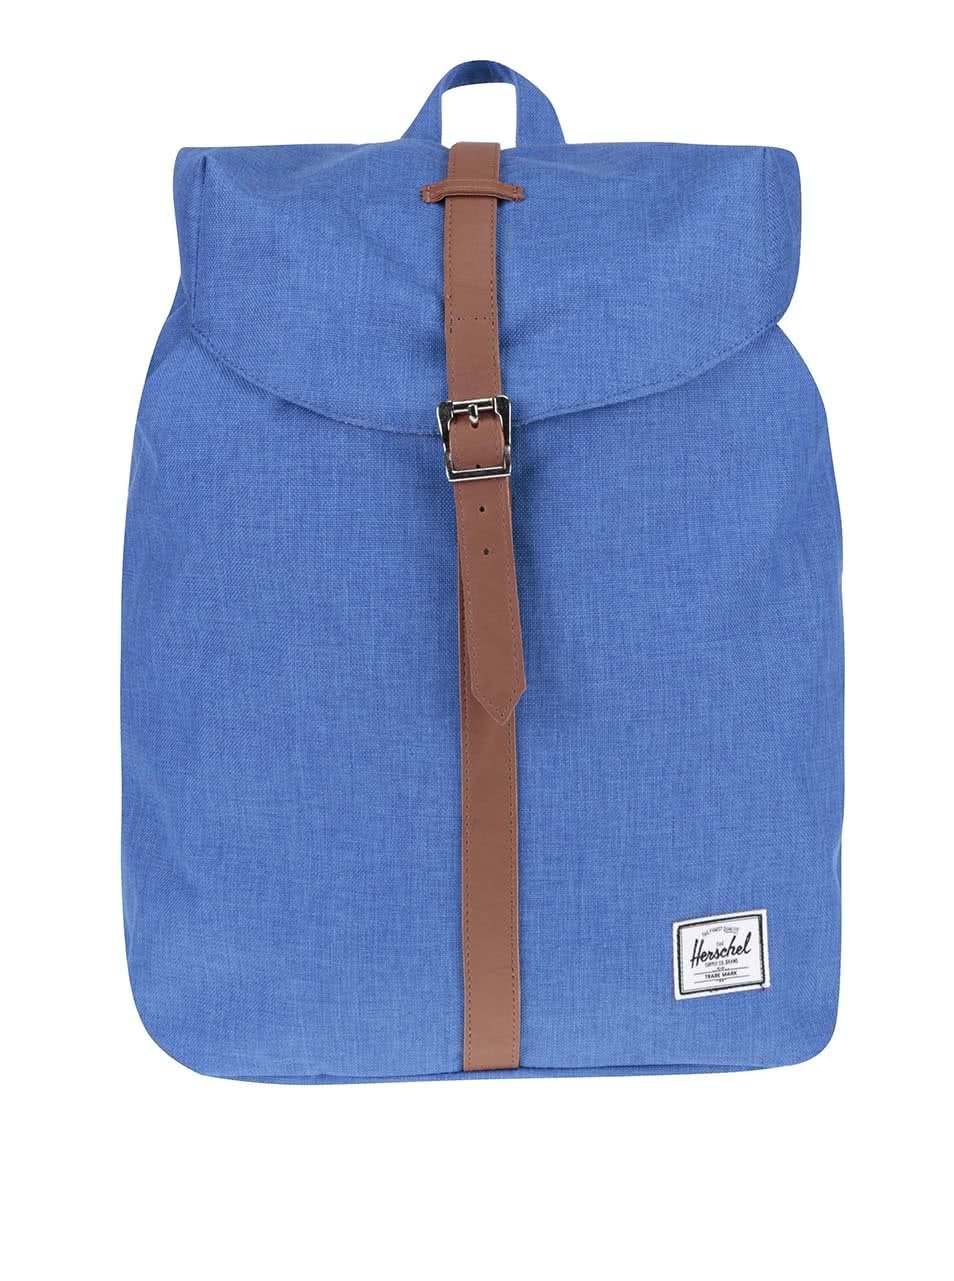 Modrý batoh s hnědým popruhem Herschel Post 16 l